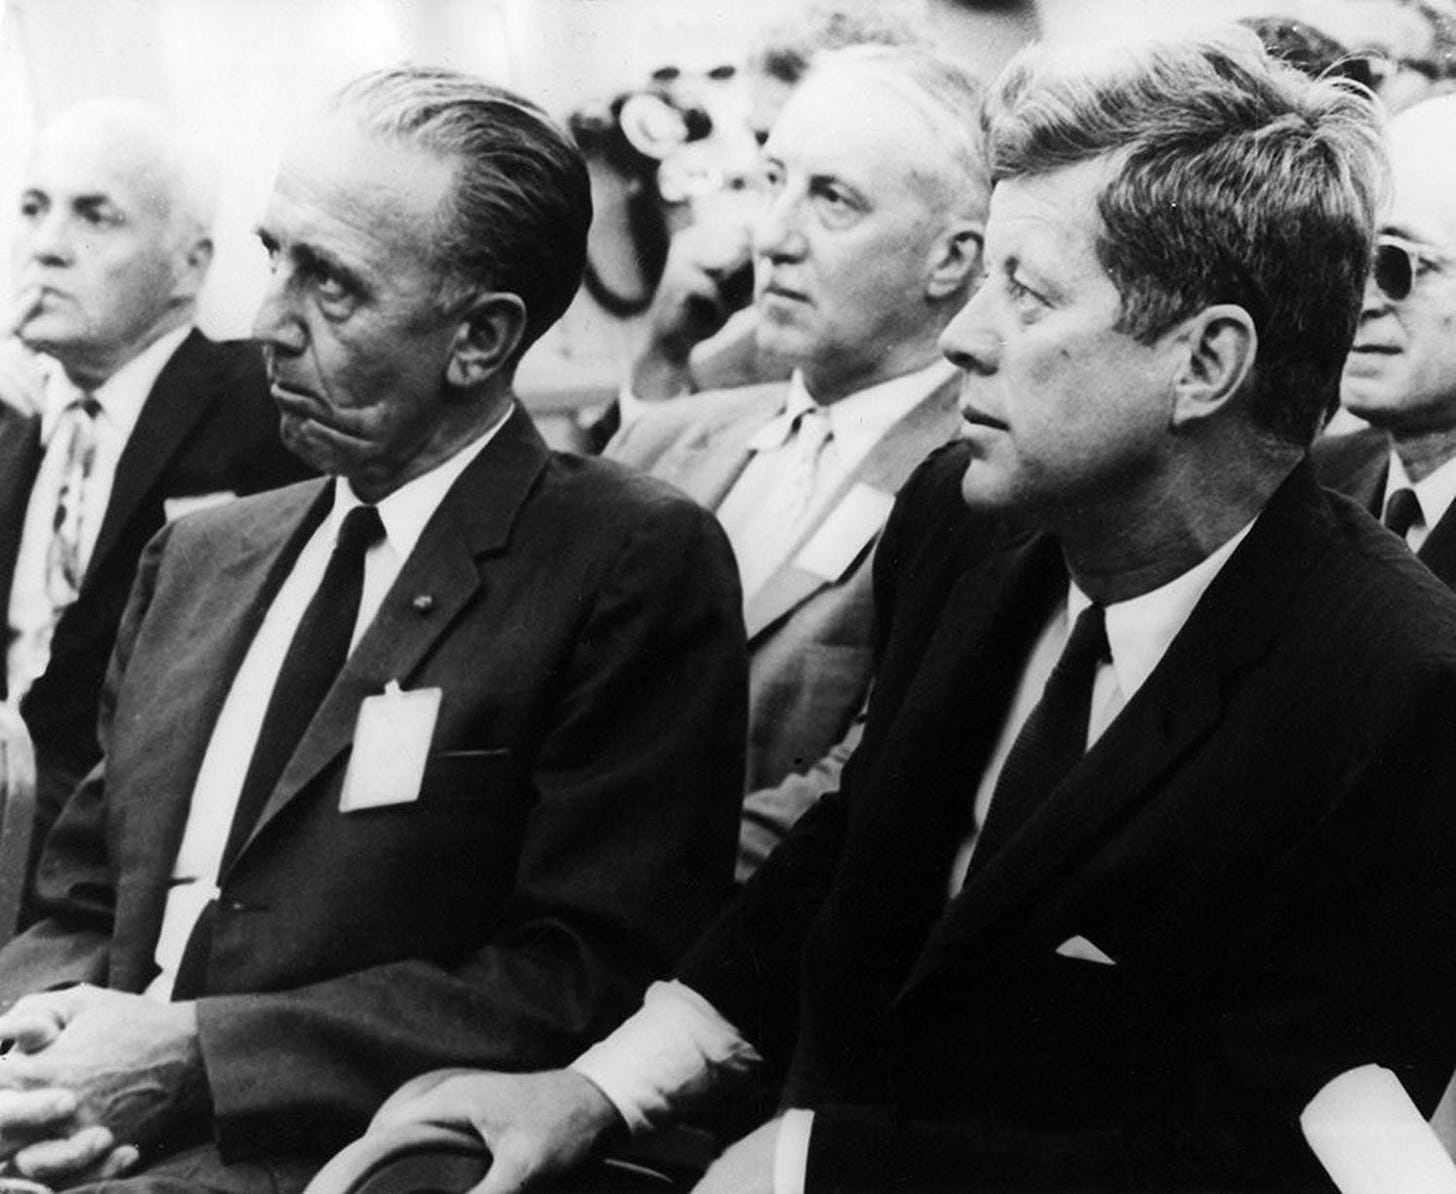 Fromer Nazi scientist Kurt Debus with President John F Kennedy in 1962